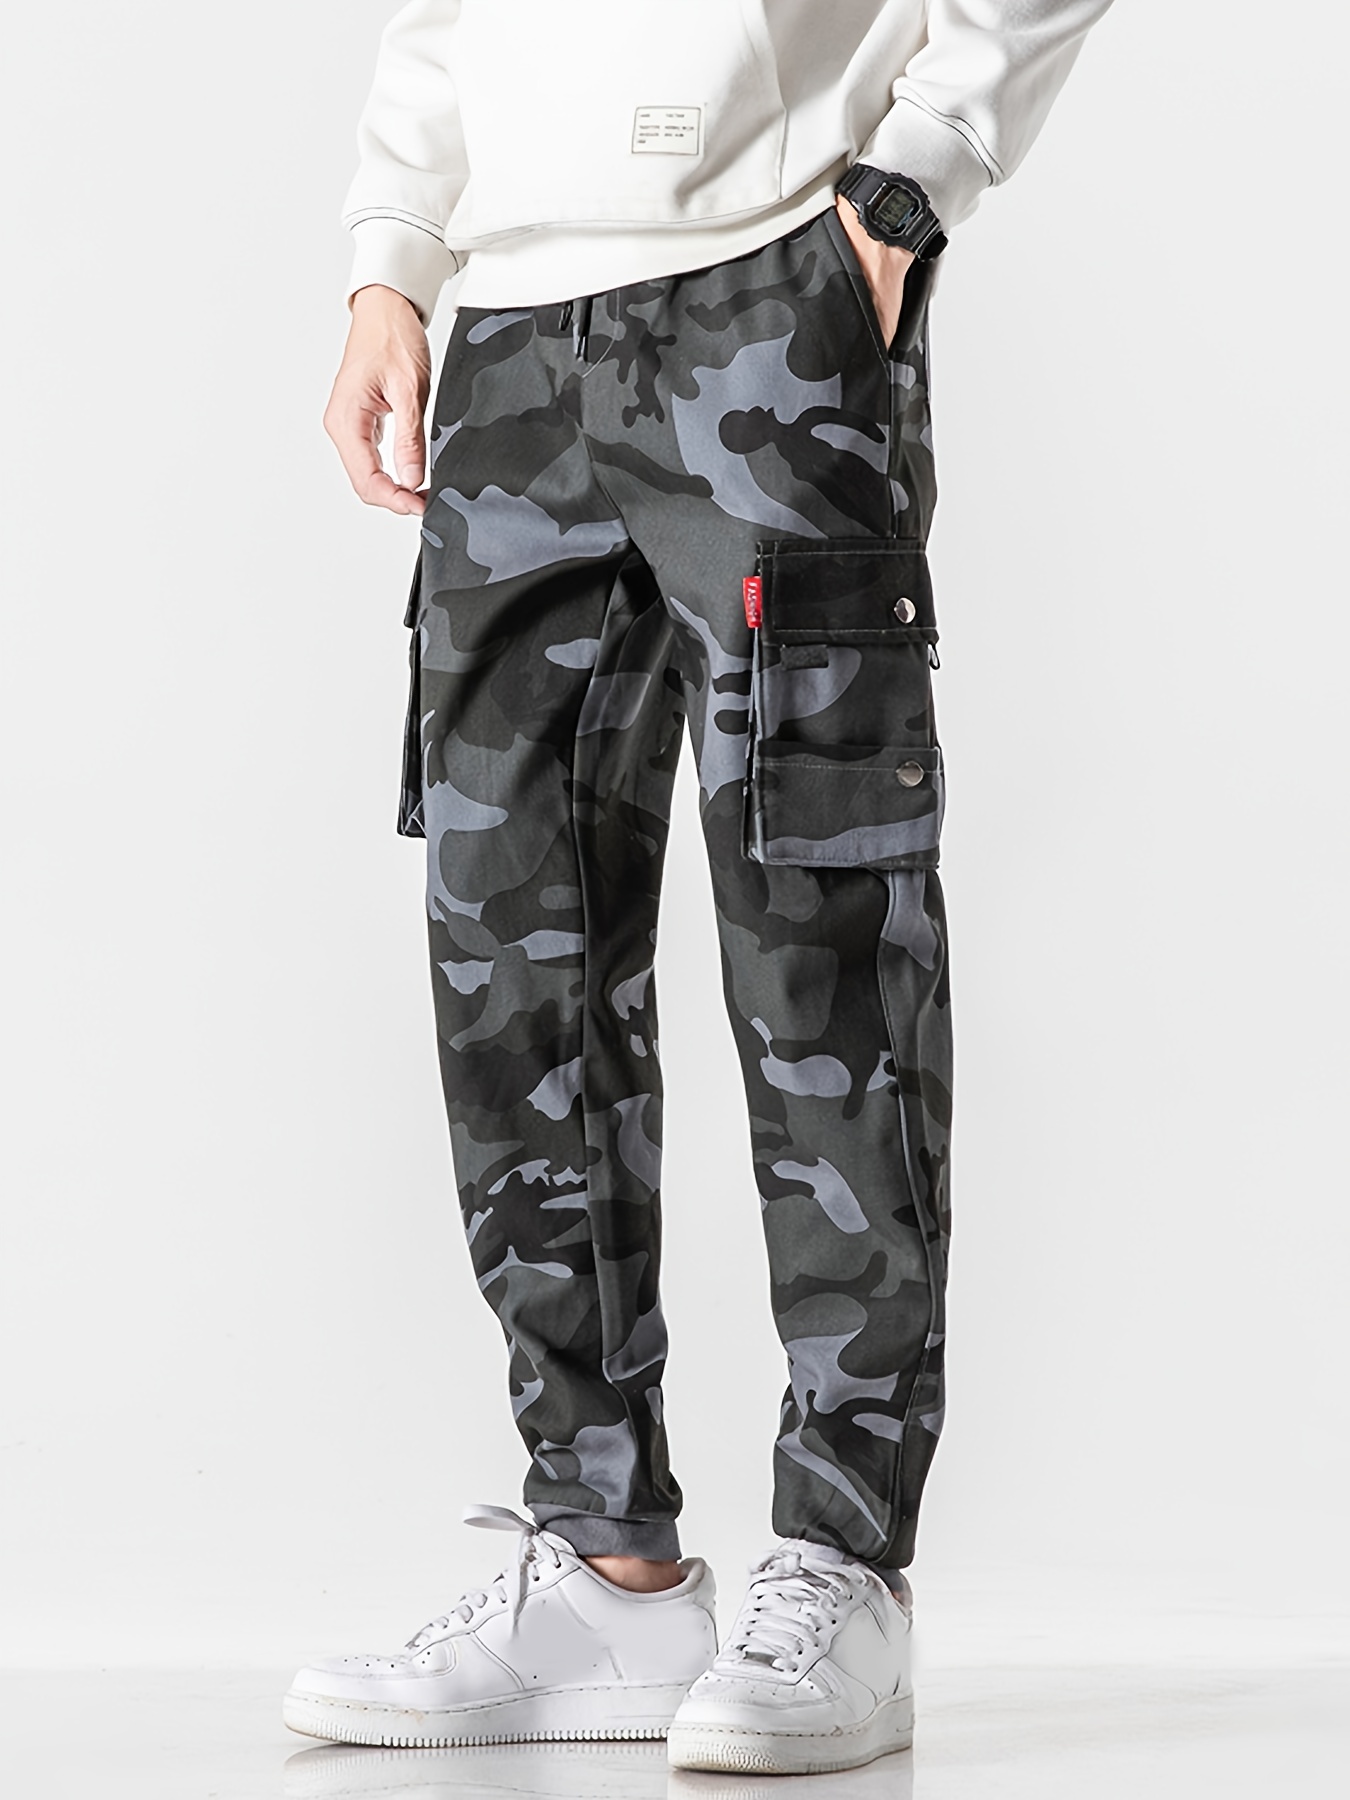 Black Sweatpants For Men Mens Spring And Fashion Autumn Cotton